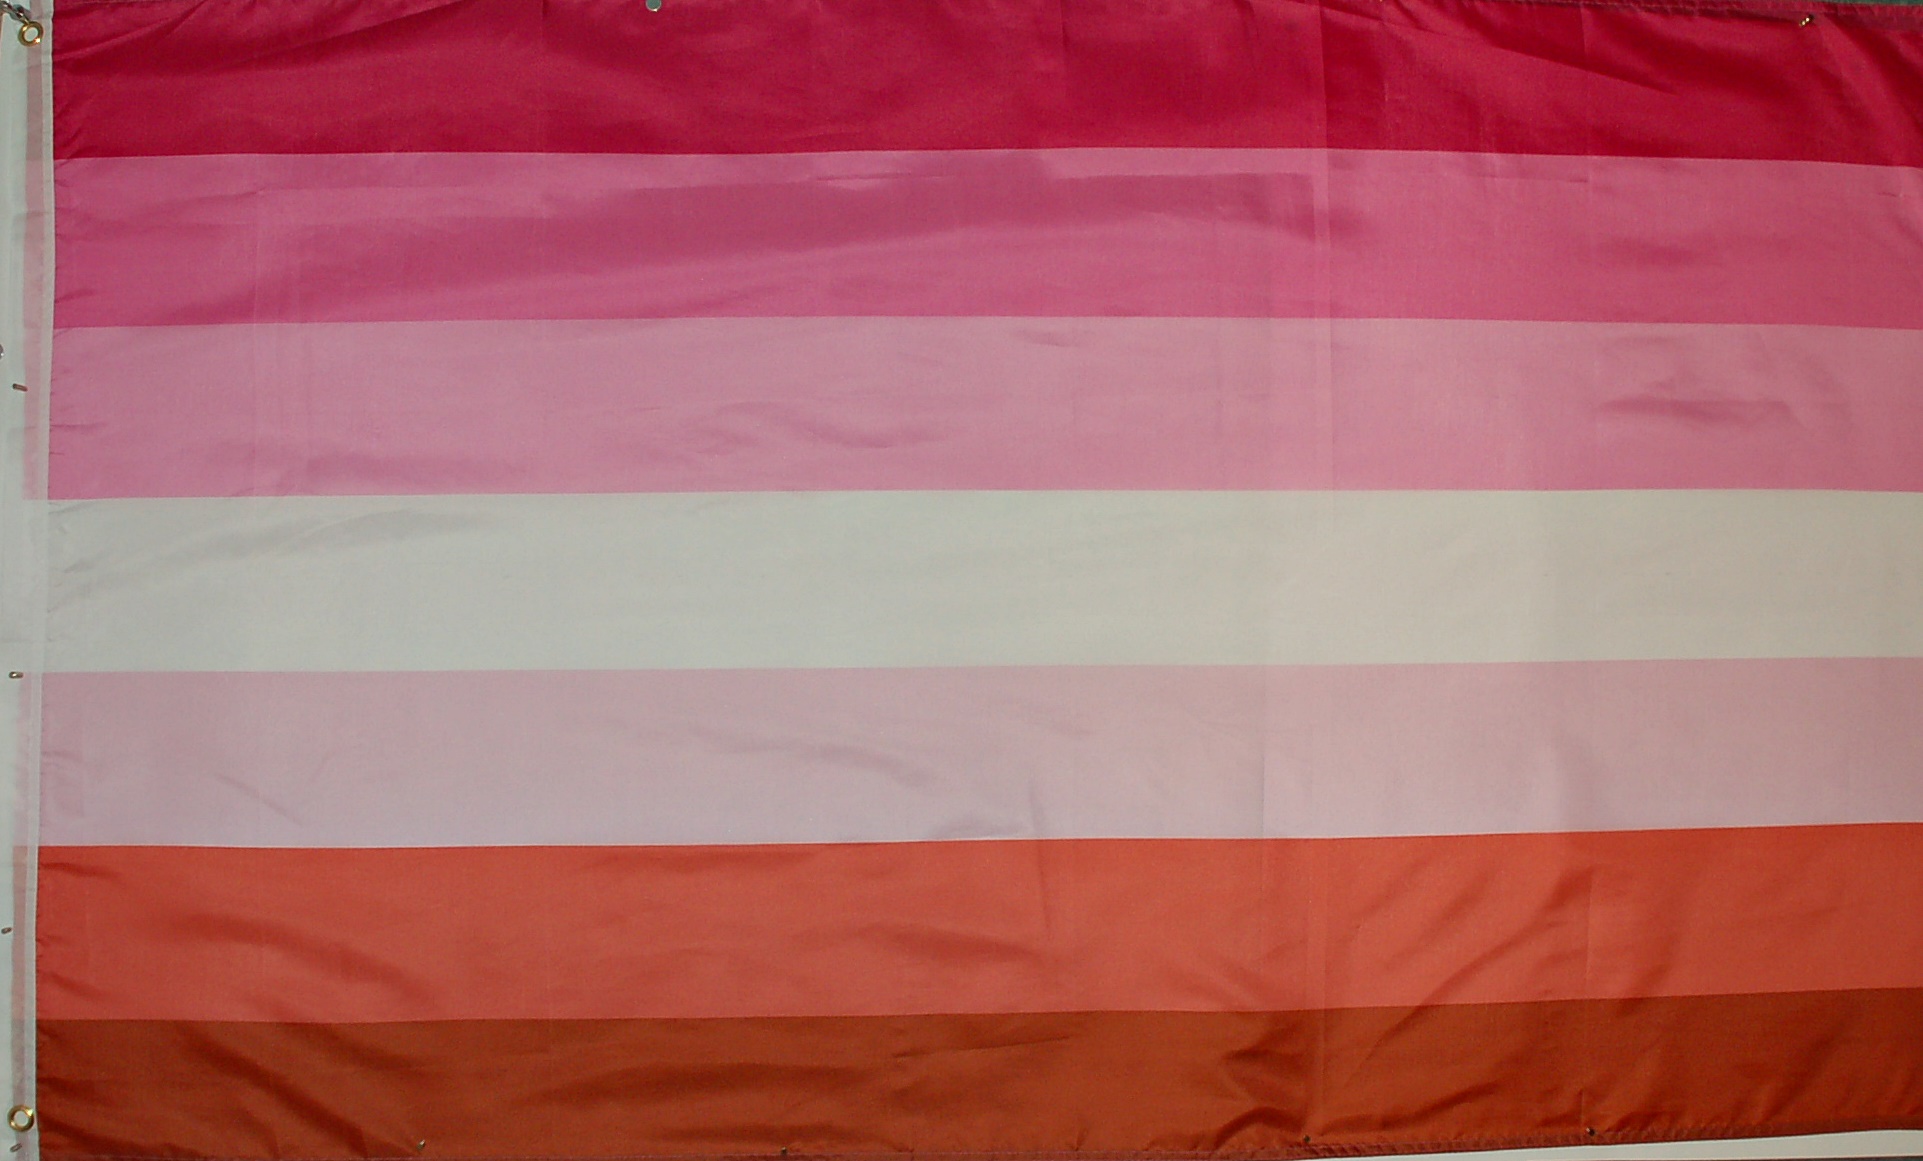 Lesbenflagge1